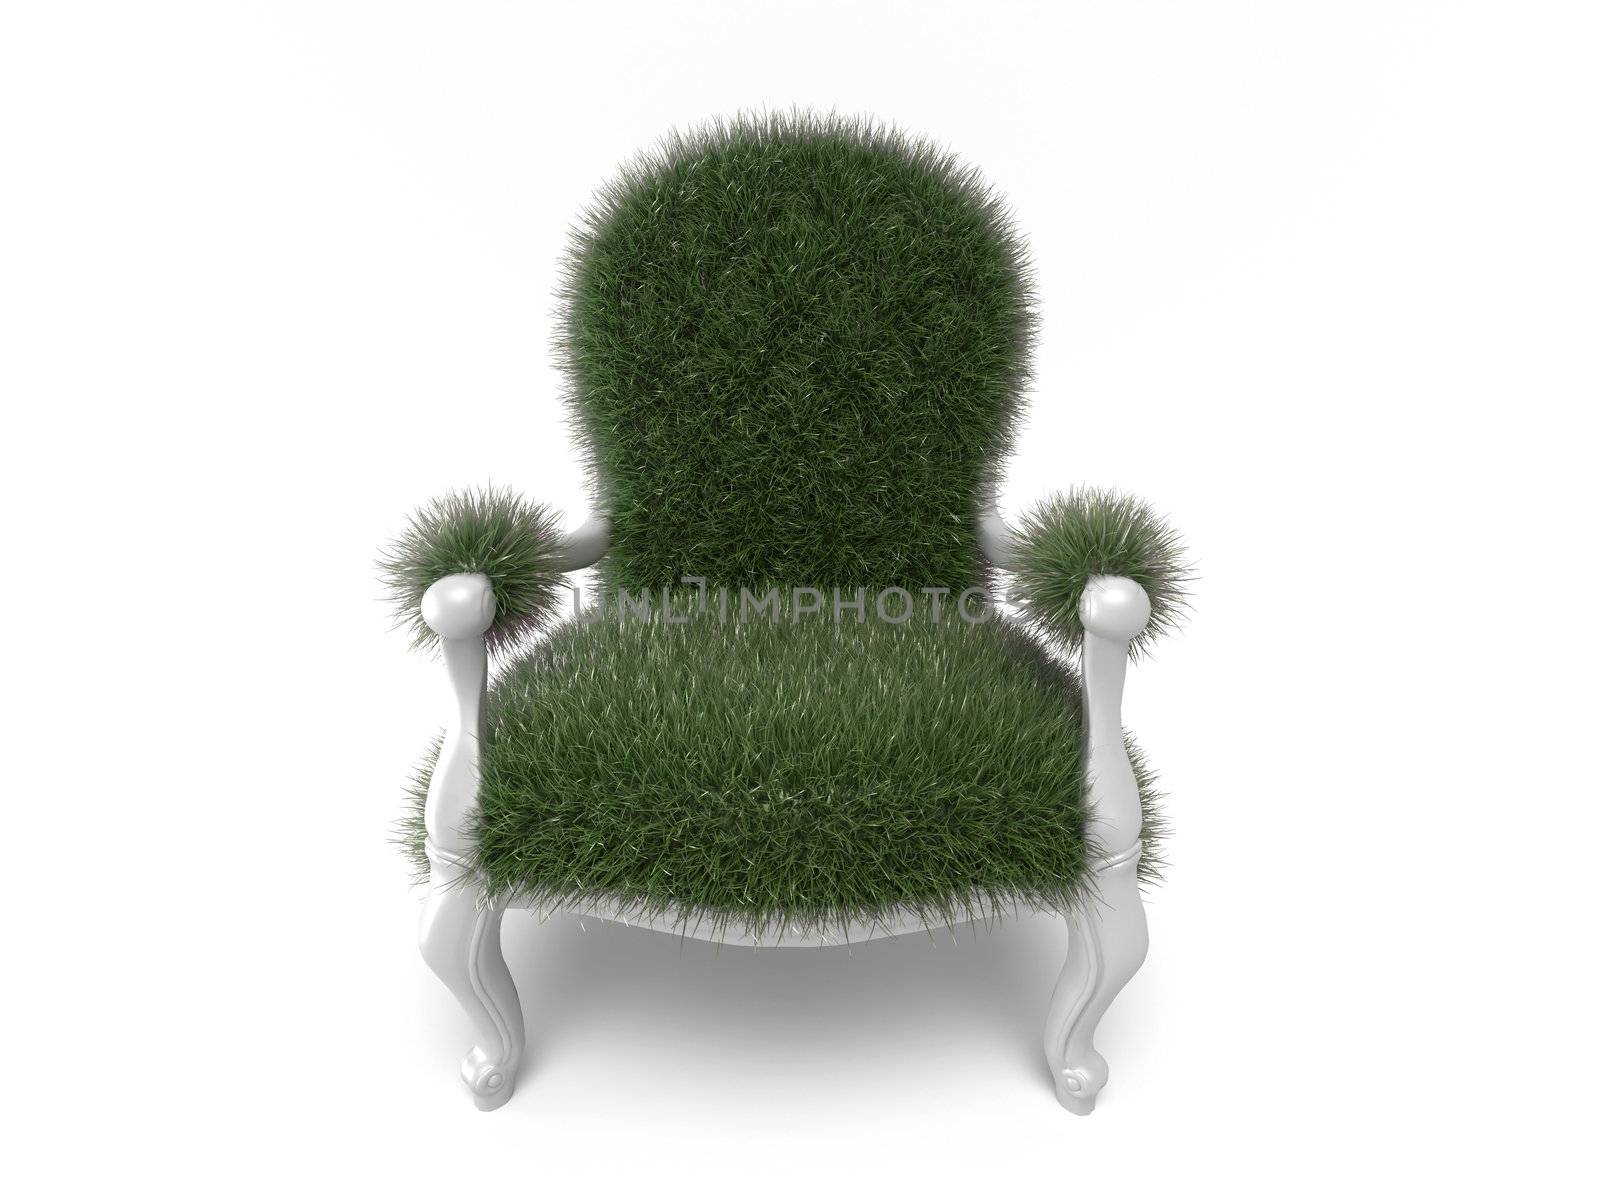 Go green Chair by richwolf